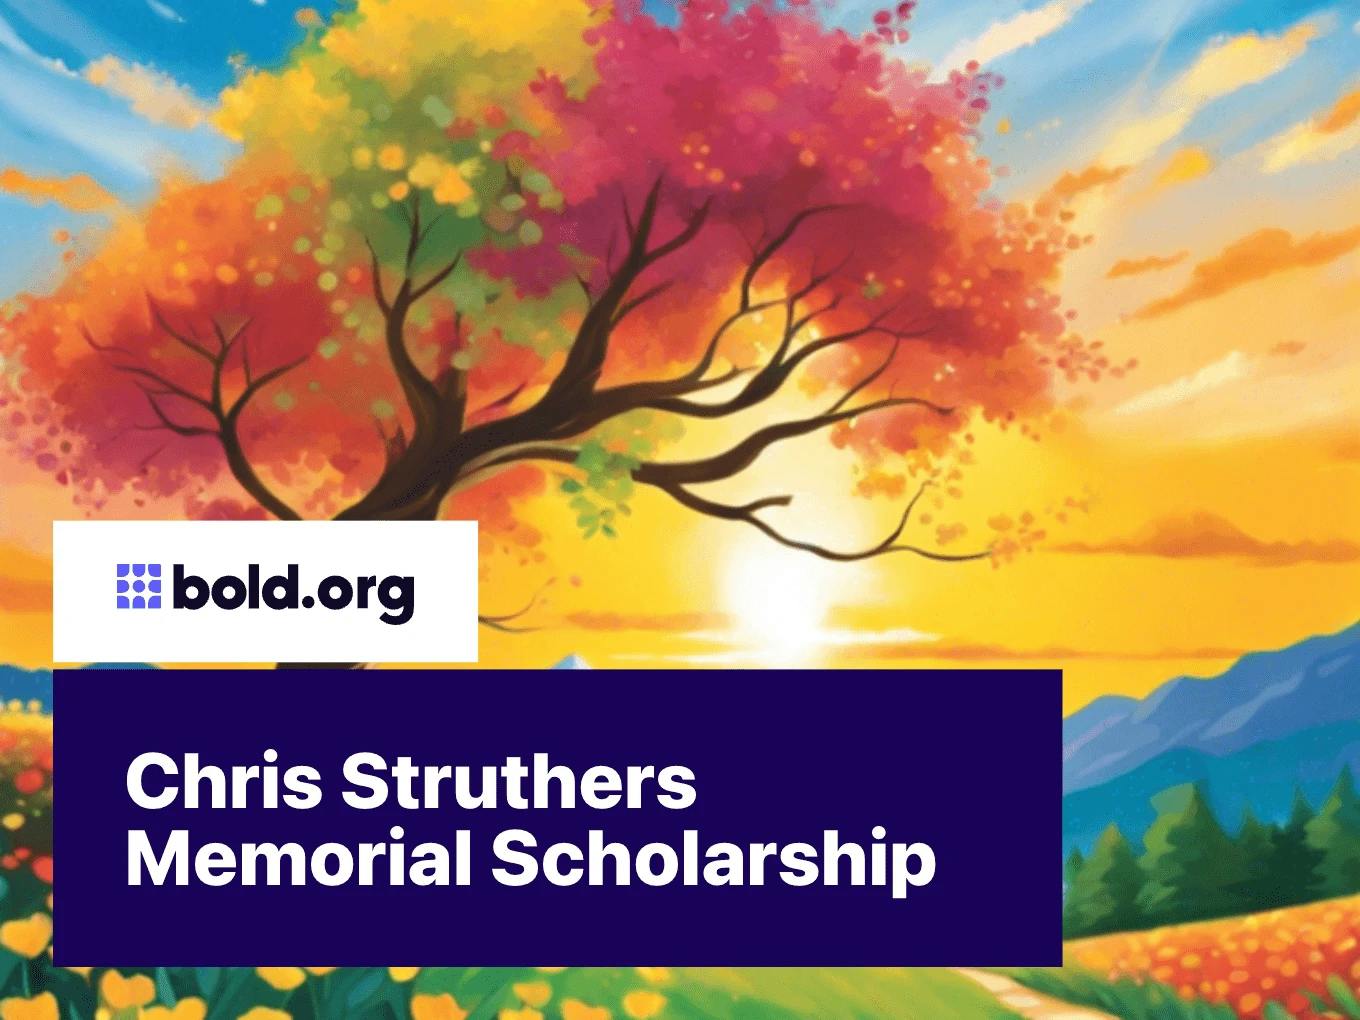 Chris Struthers Memorial Scholarship